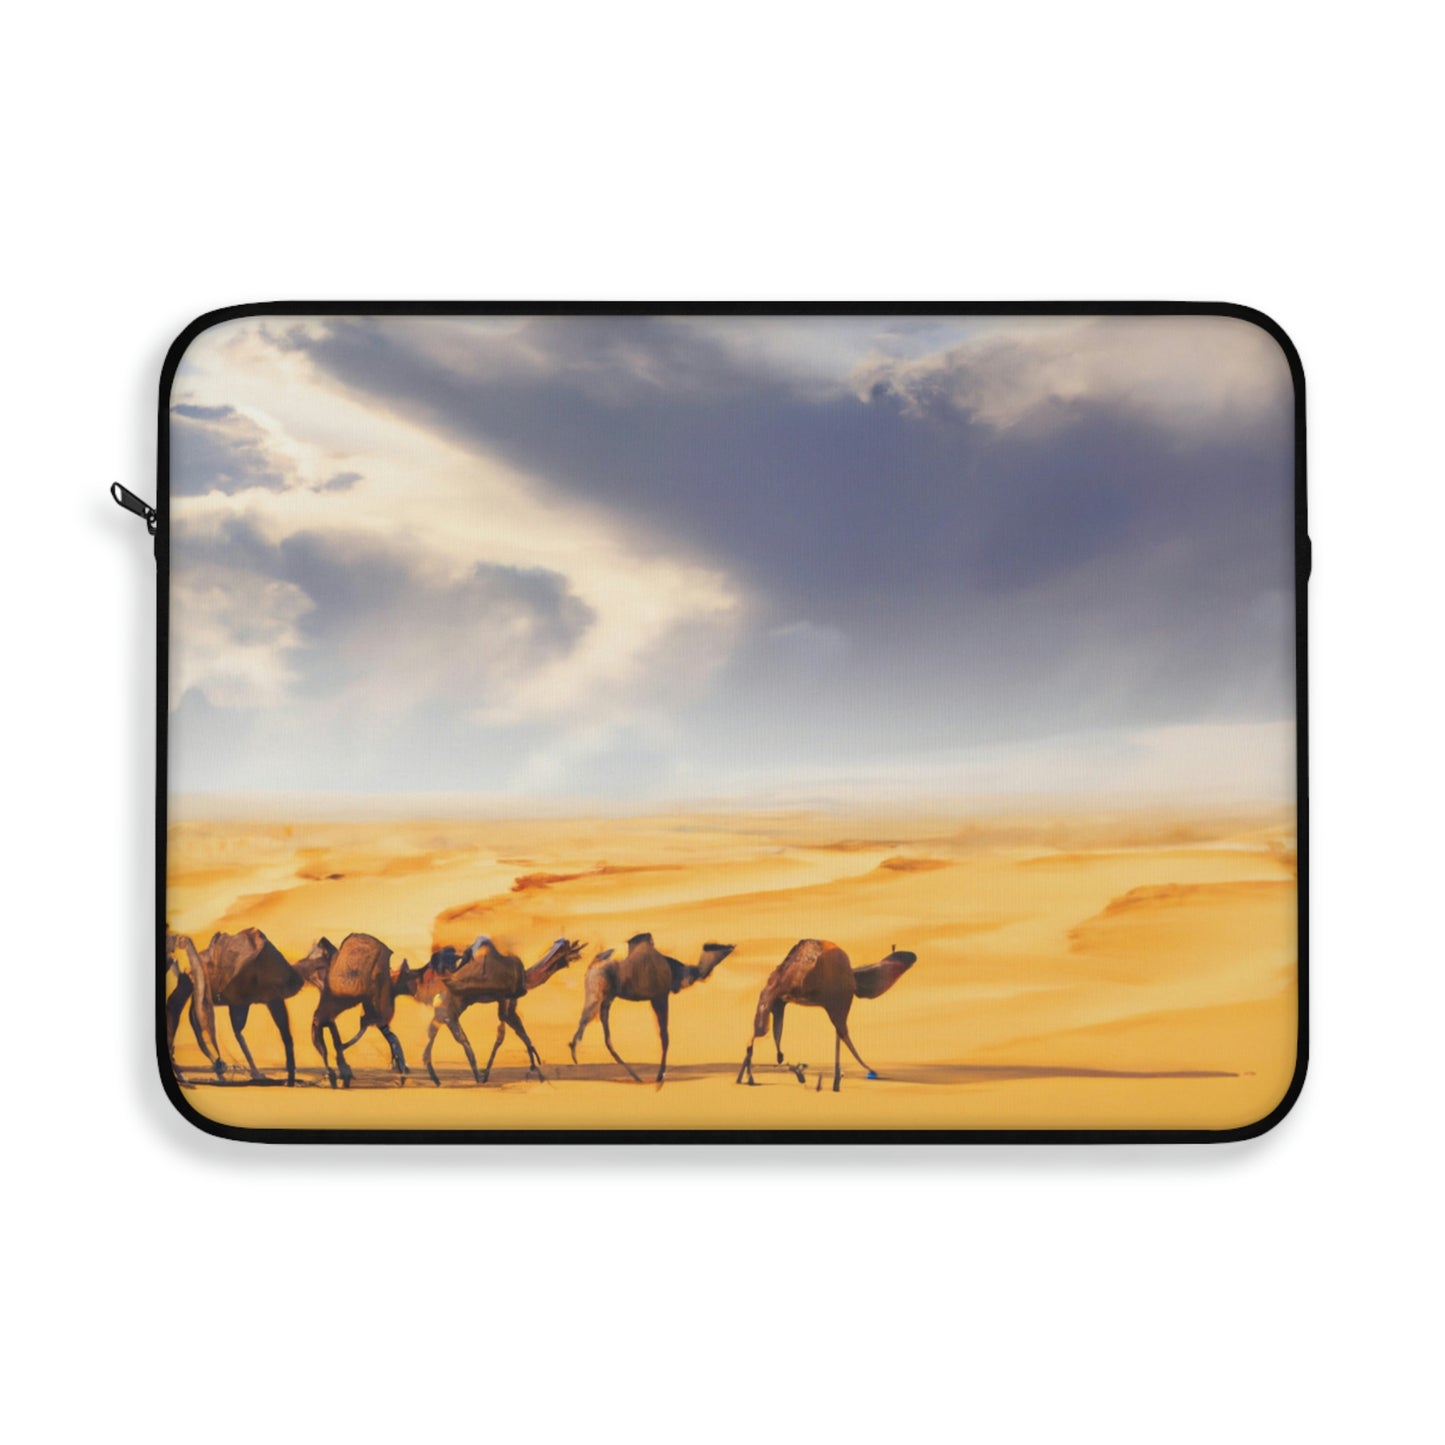 Laptop Sleeve - Camel Caravan